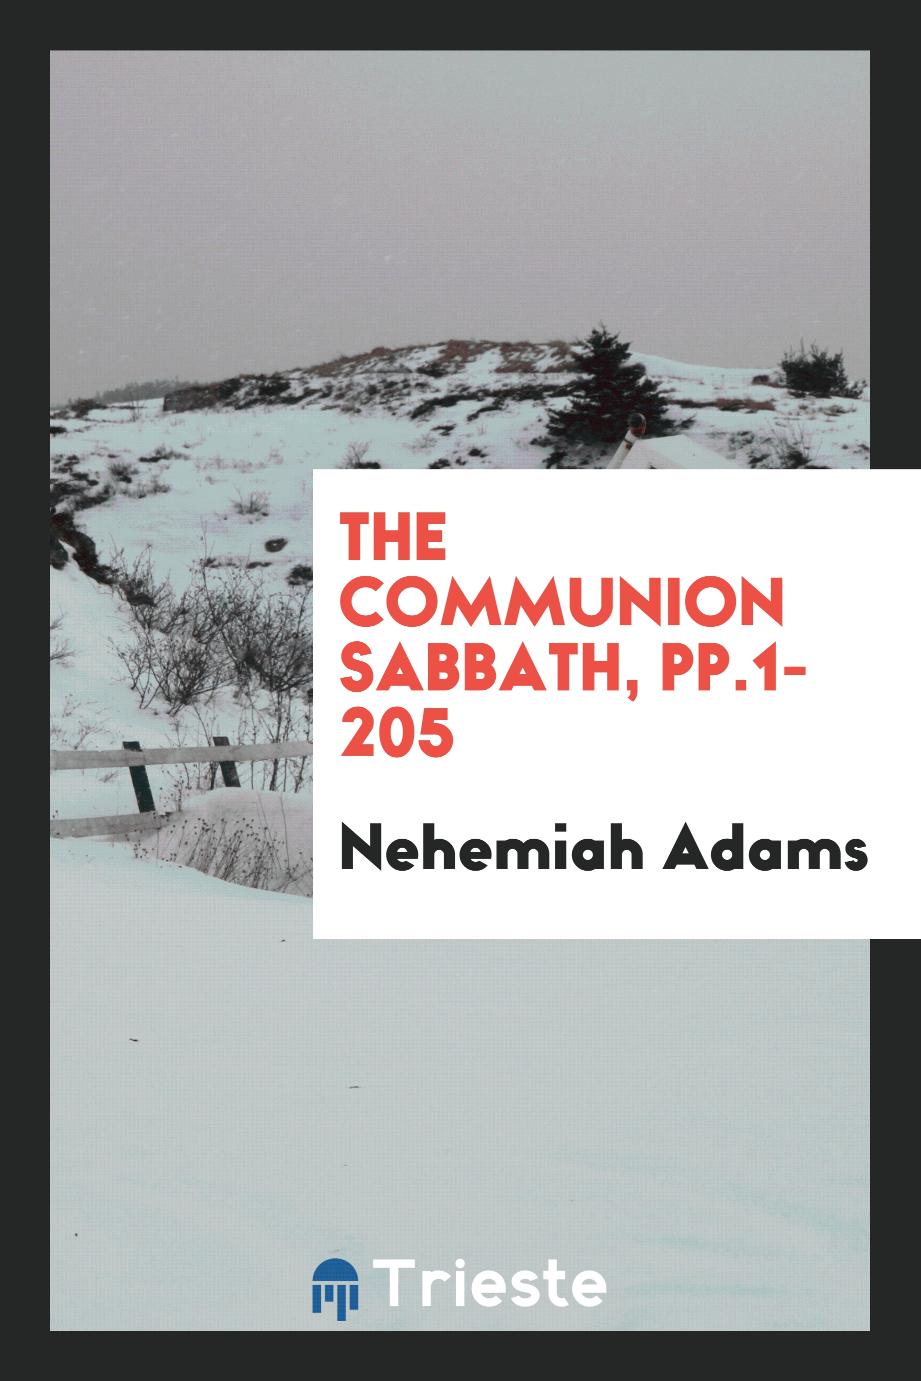 The Communion Sabbath, pp.1-205